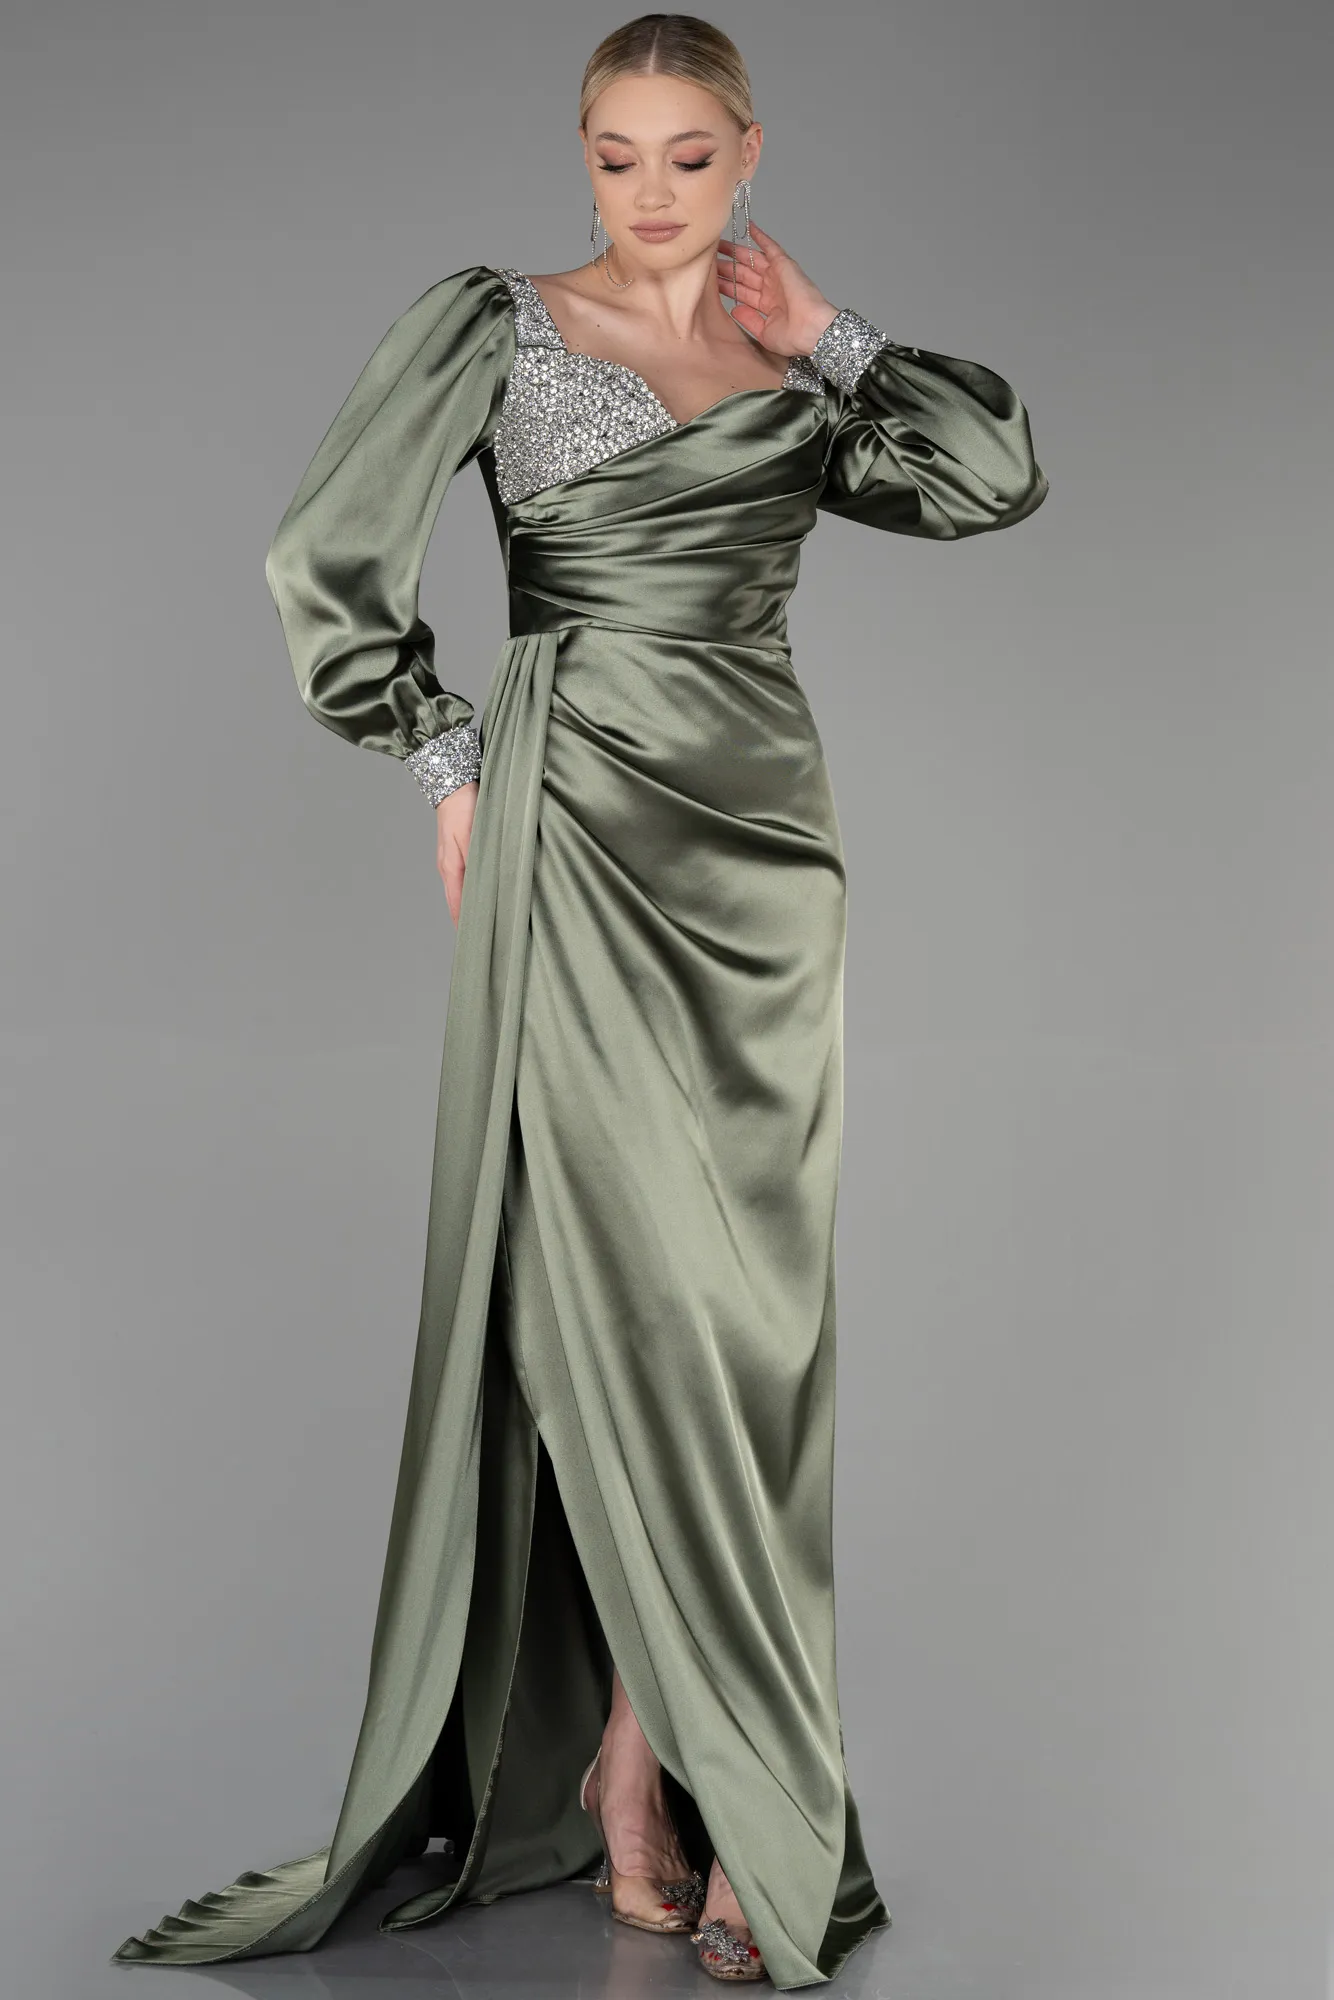 Olive Drab-Long Satin Evening Dress ABU3318